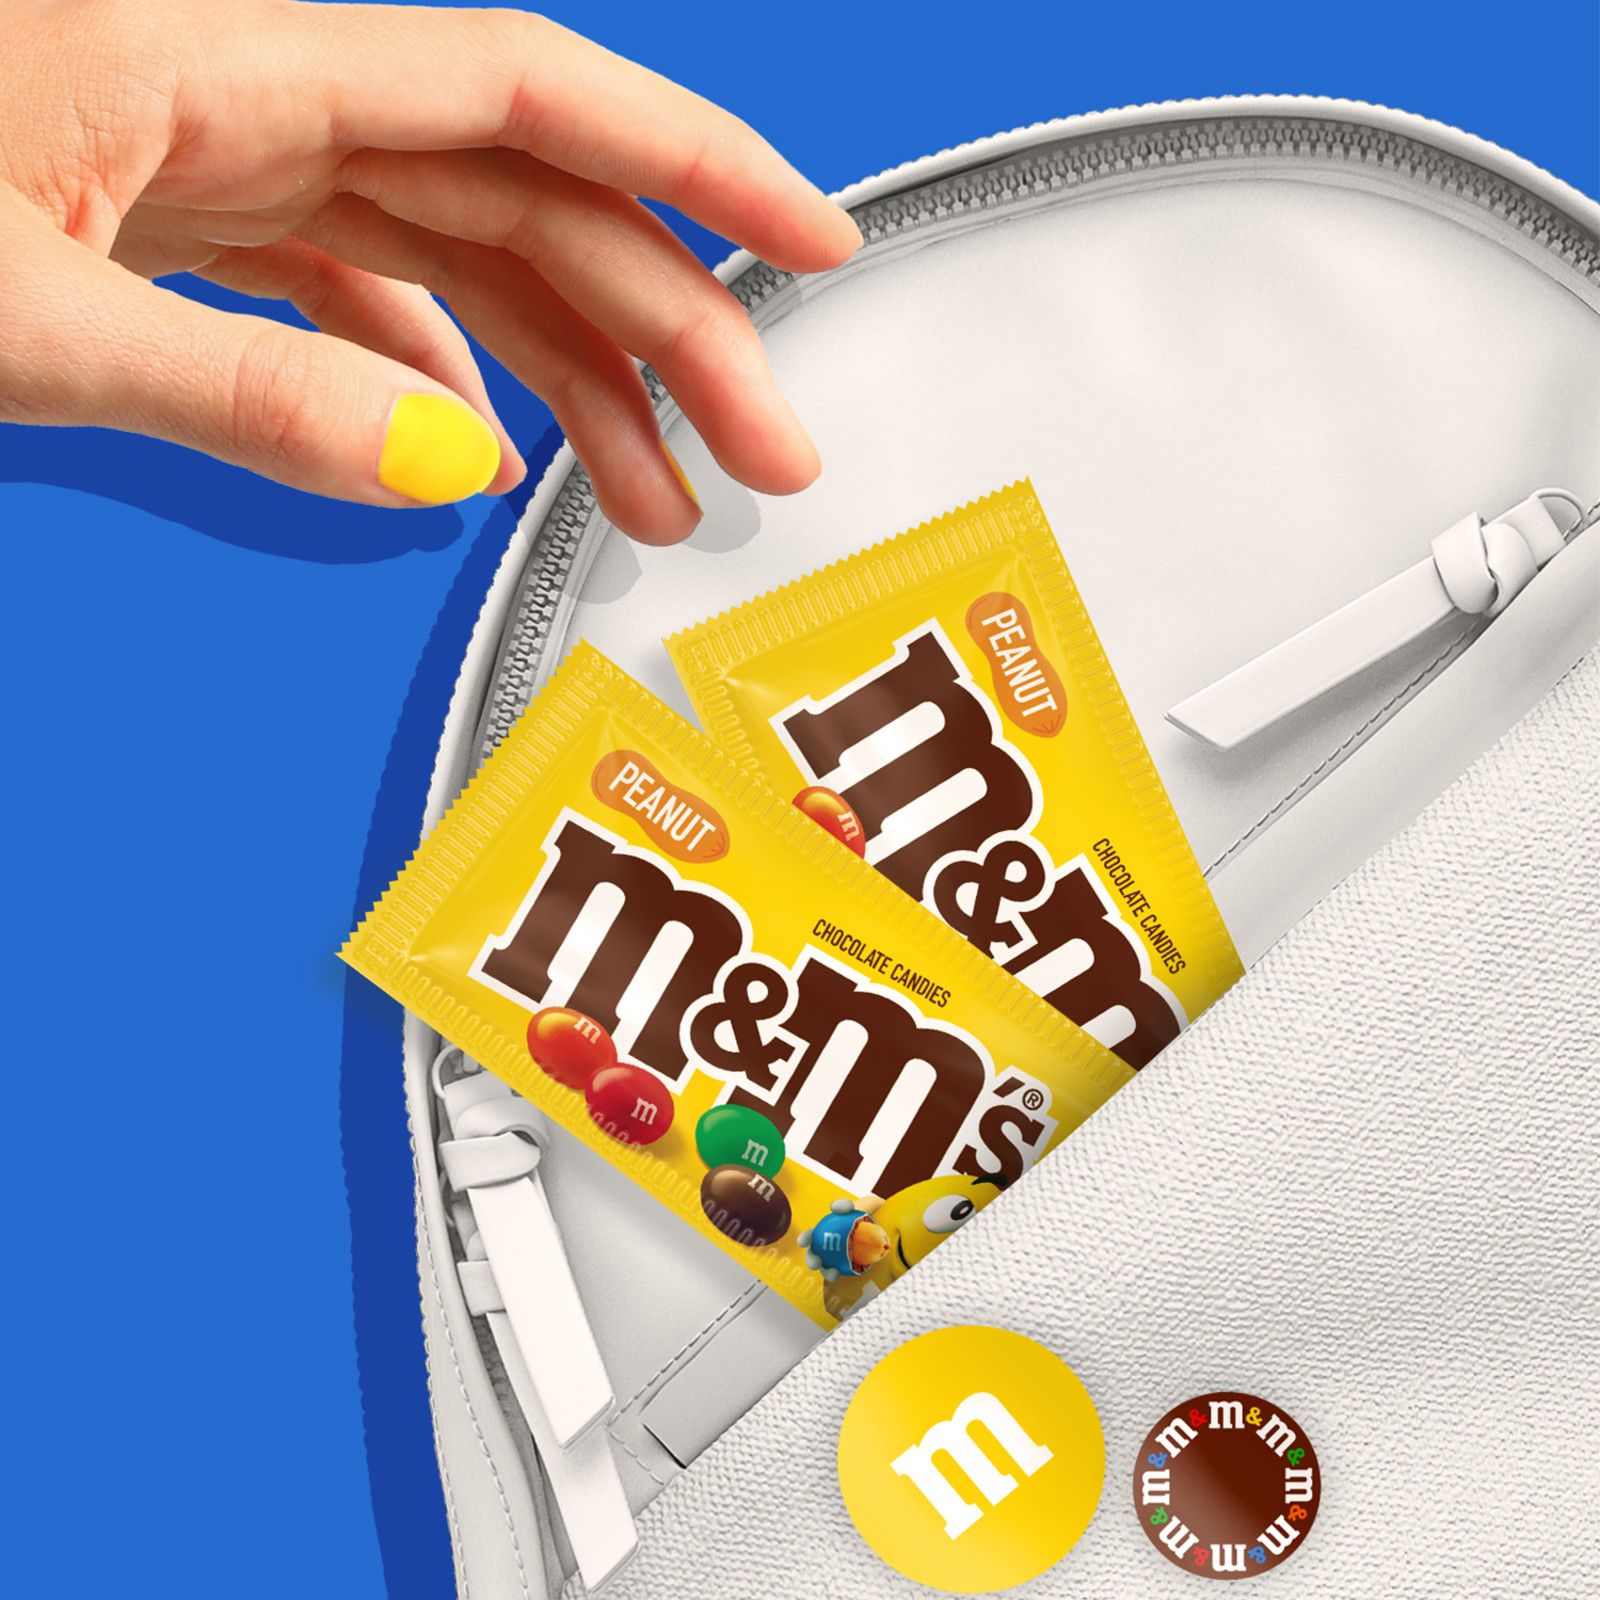  M&M'S Peanut Milk Chocolate Candy, Super Bowl